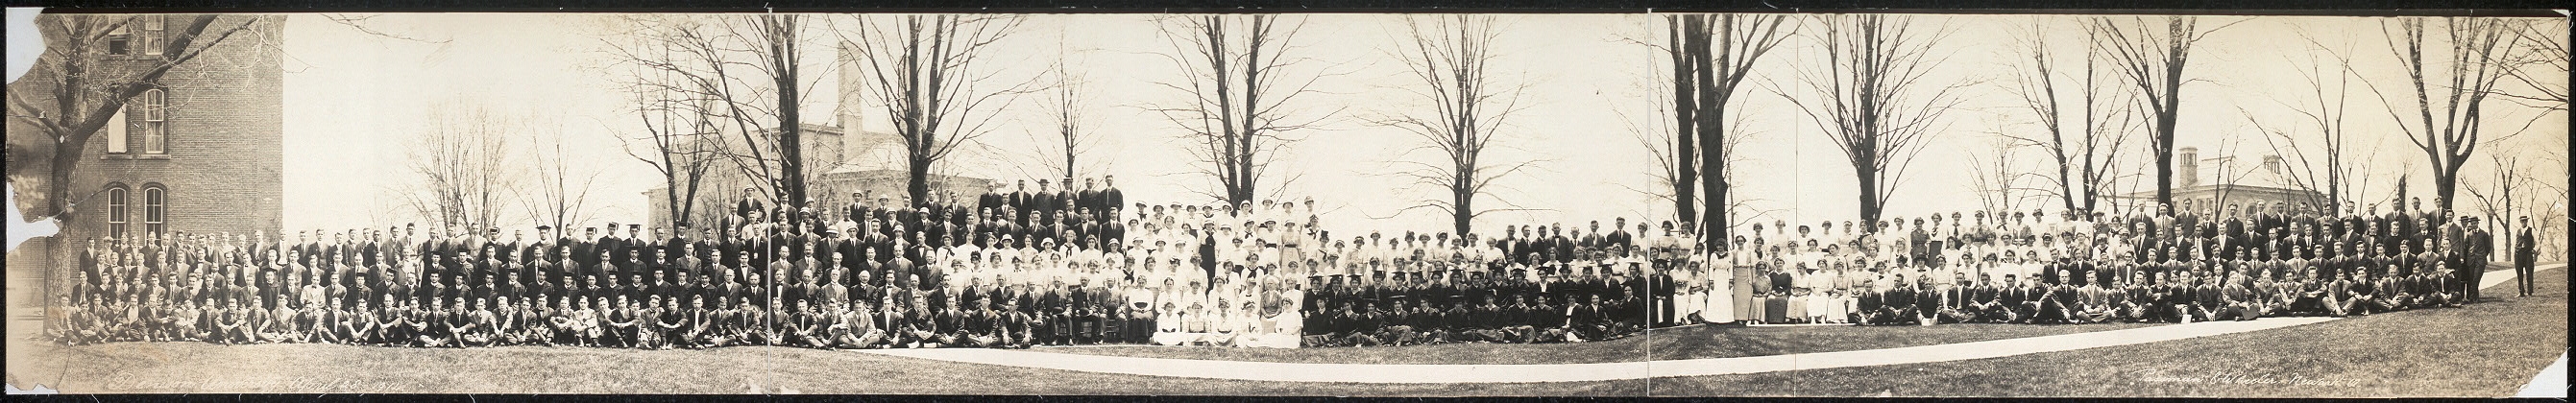 Denison University, April 28, 1914